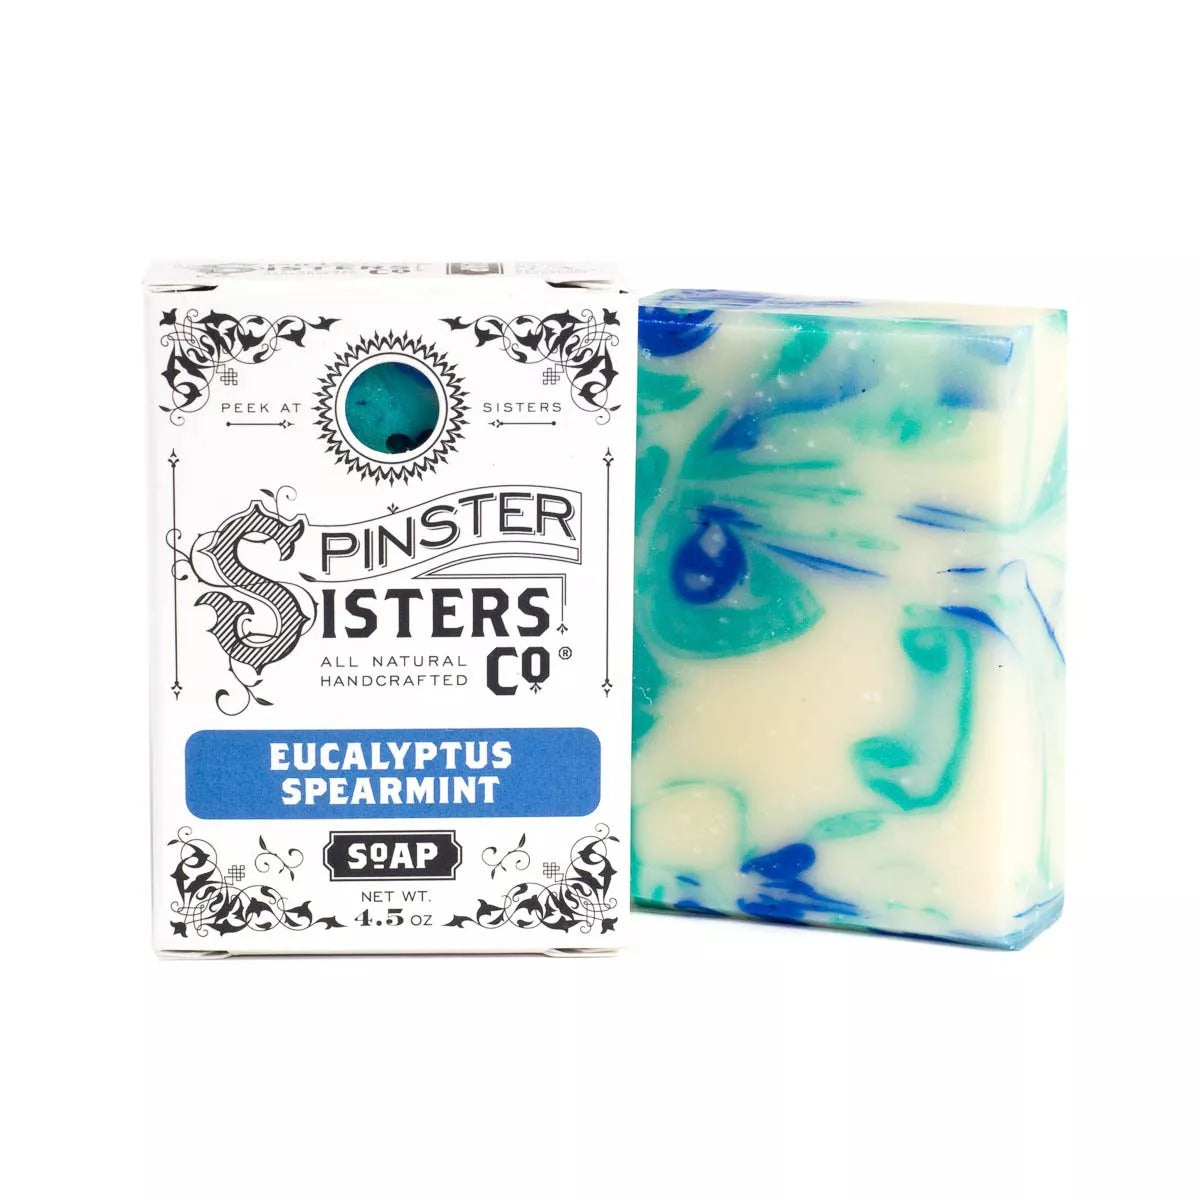 Handmade bath soap in Eucalyptus Spearmint with bright blue swirls